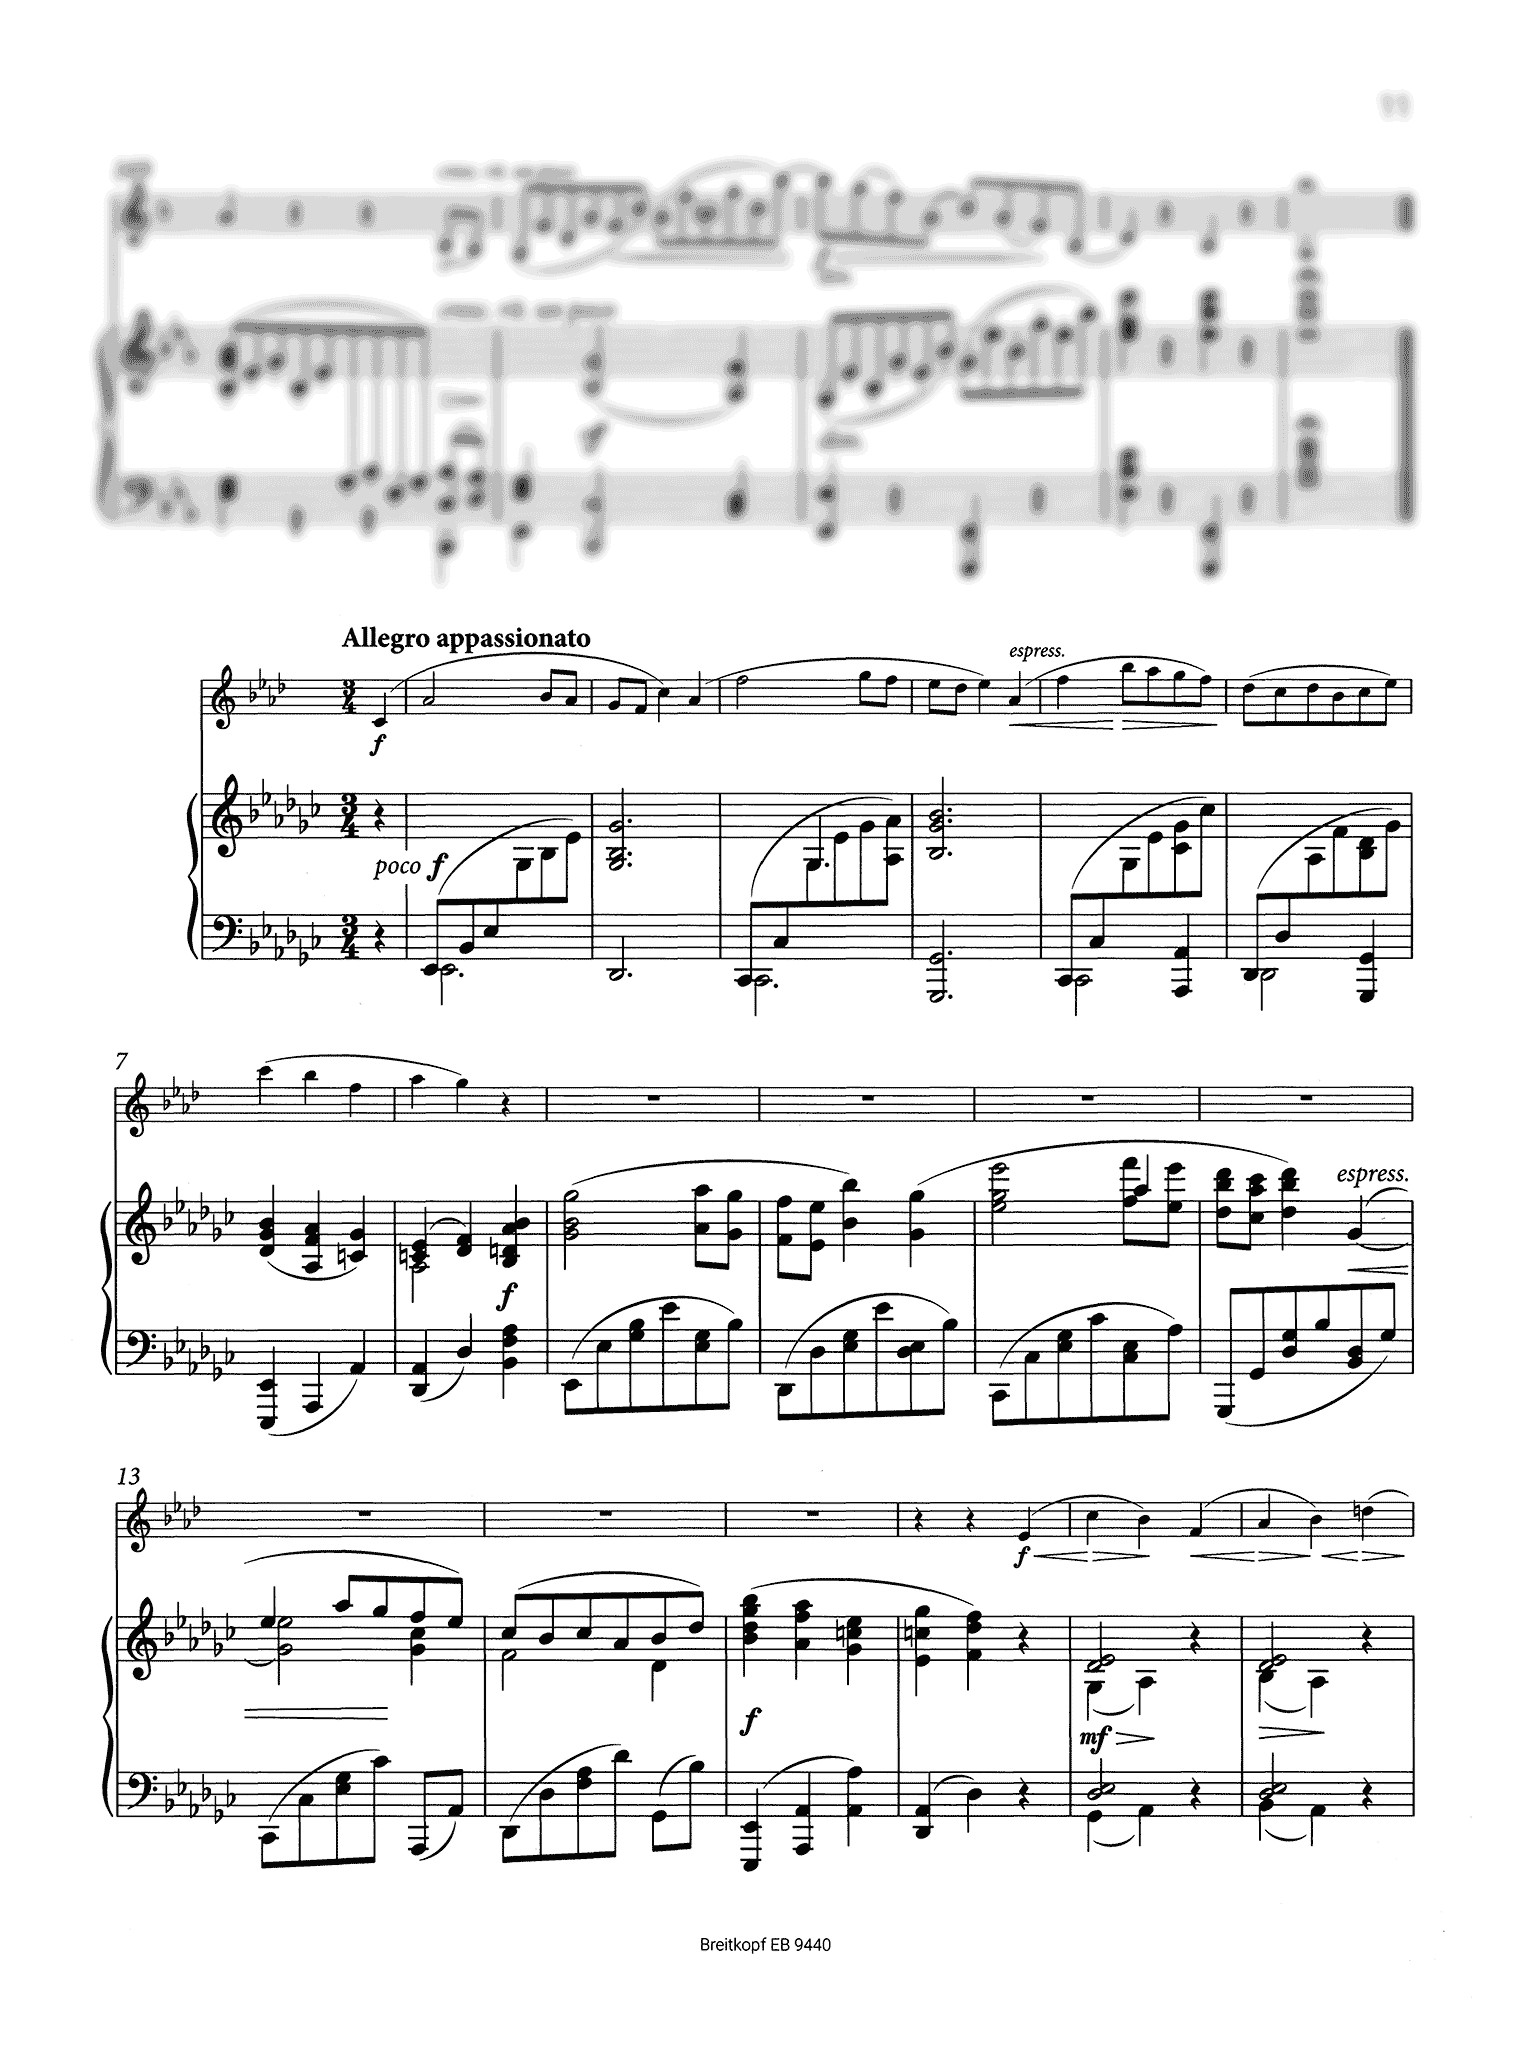 Brahms Clarinet Sonata in E-flat Major, Op. 120 No. 2 Breitkopf - Movement 2